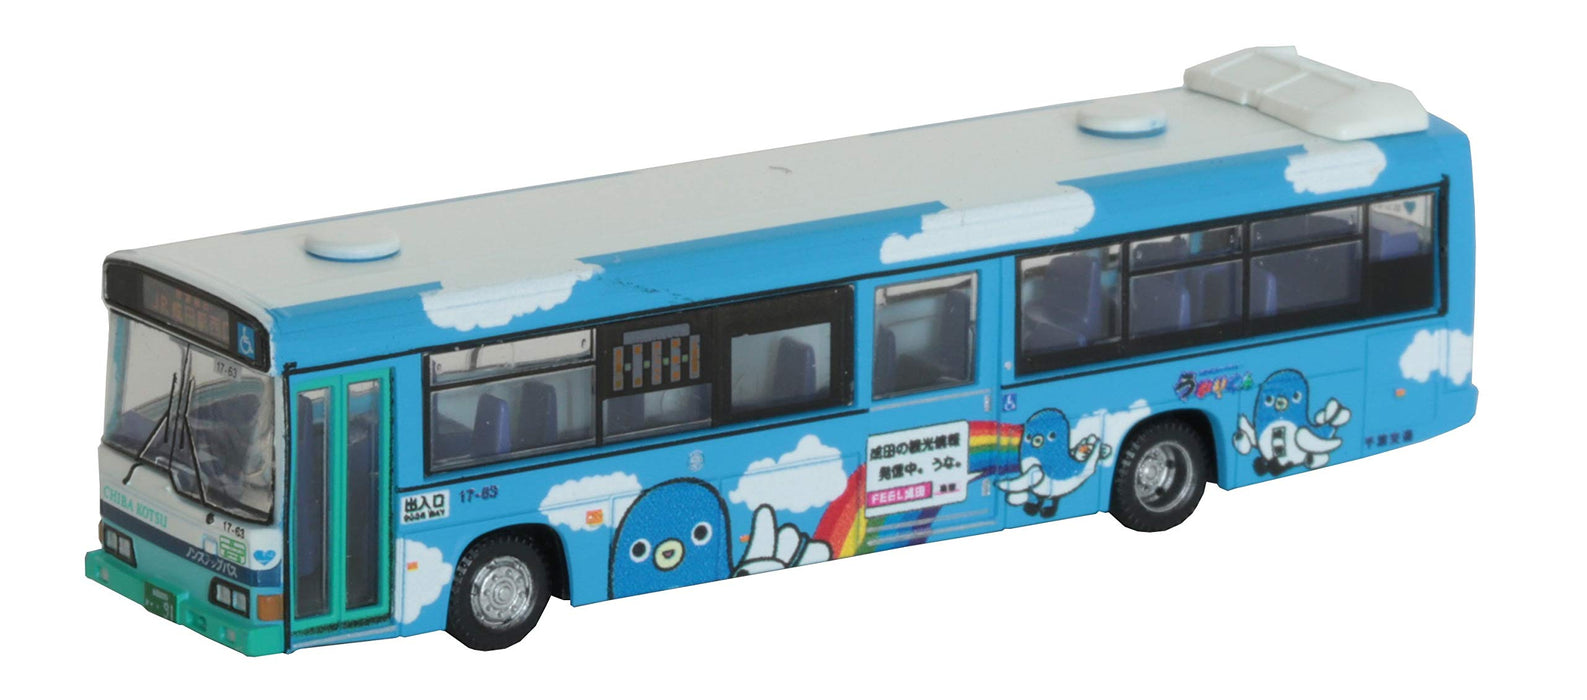 Tomytec Bus-Sammlung – Chiba Kotsu Unarikun Wrapping Bus Diorama, limitierte Erstausgabe